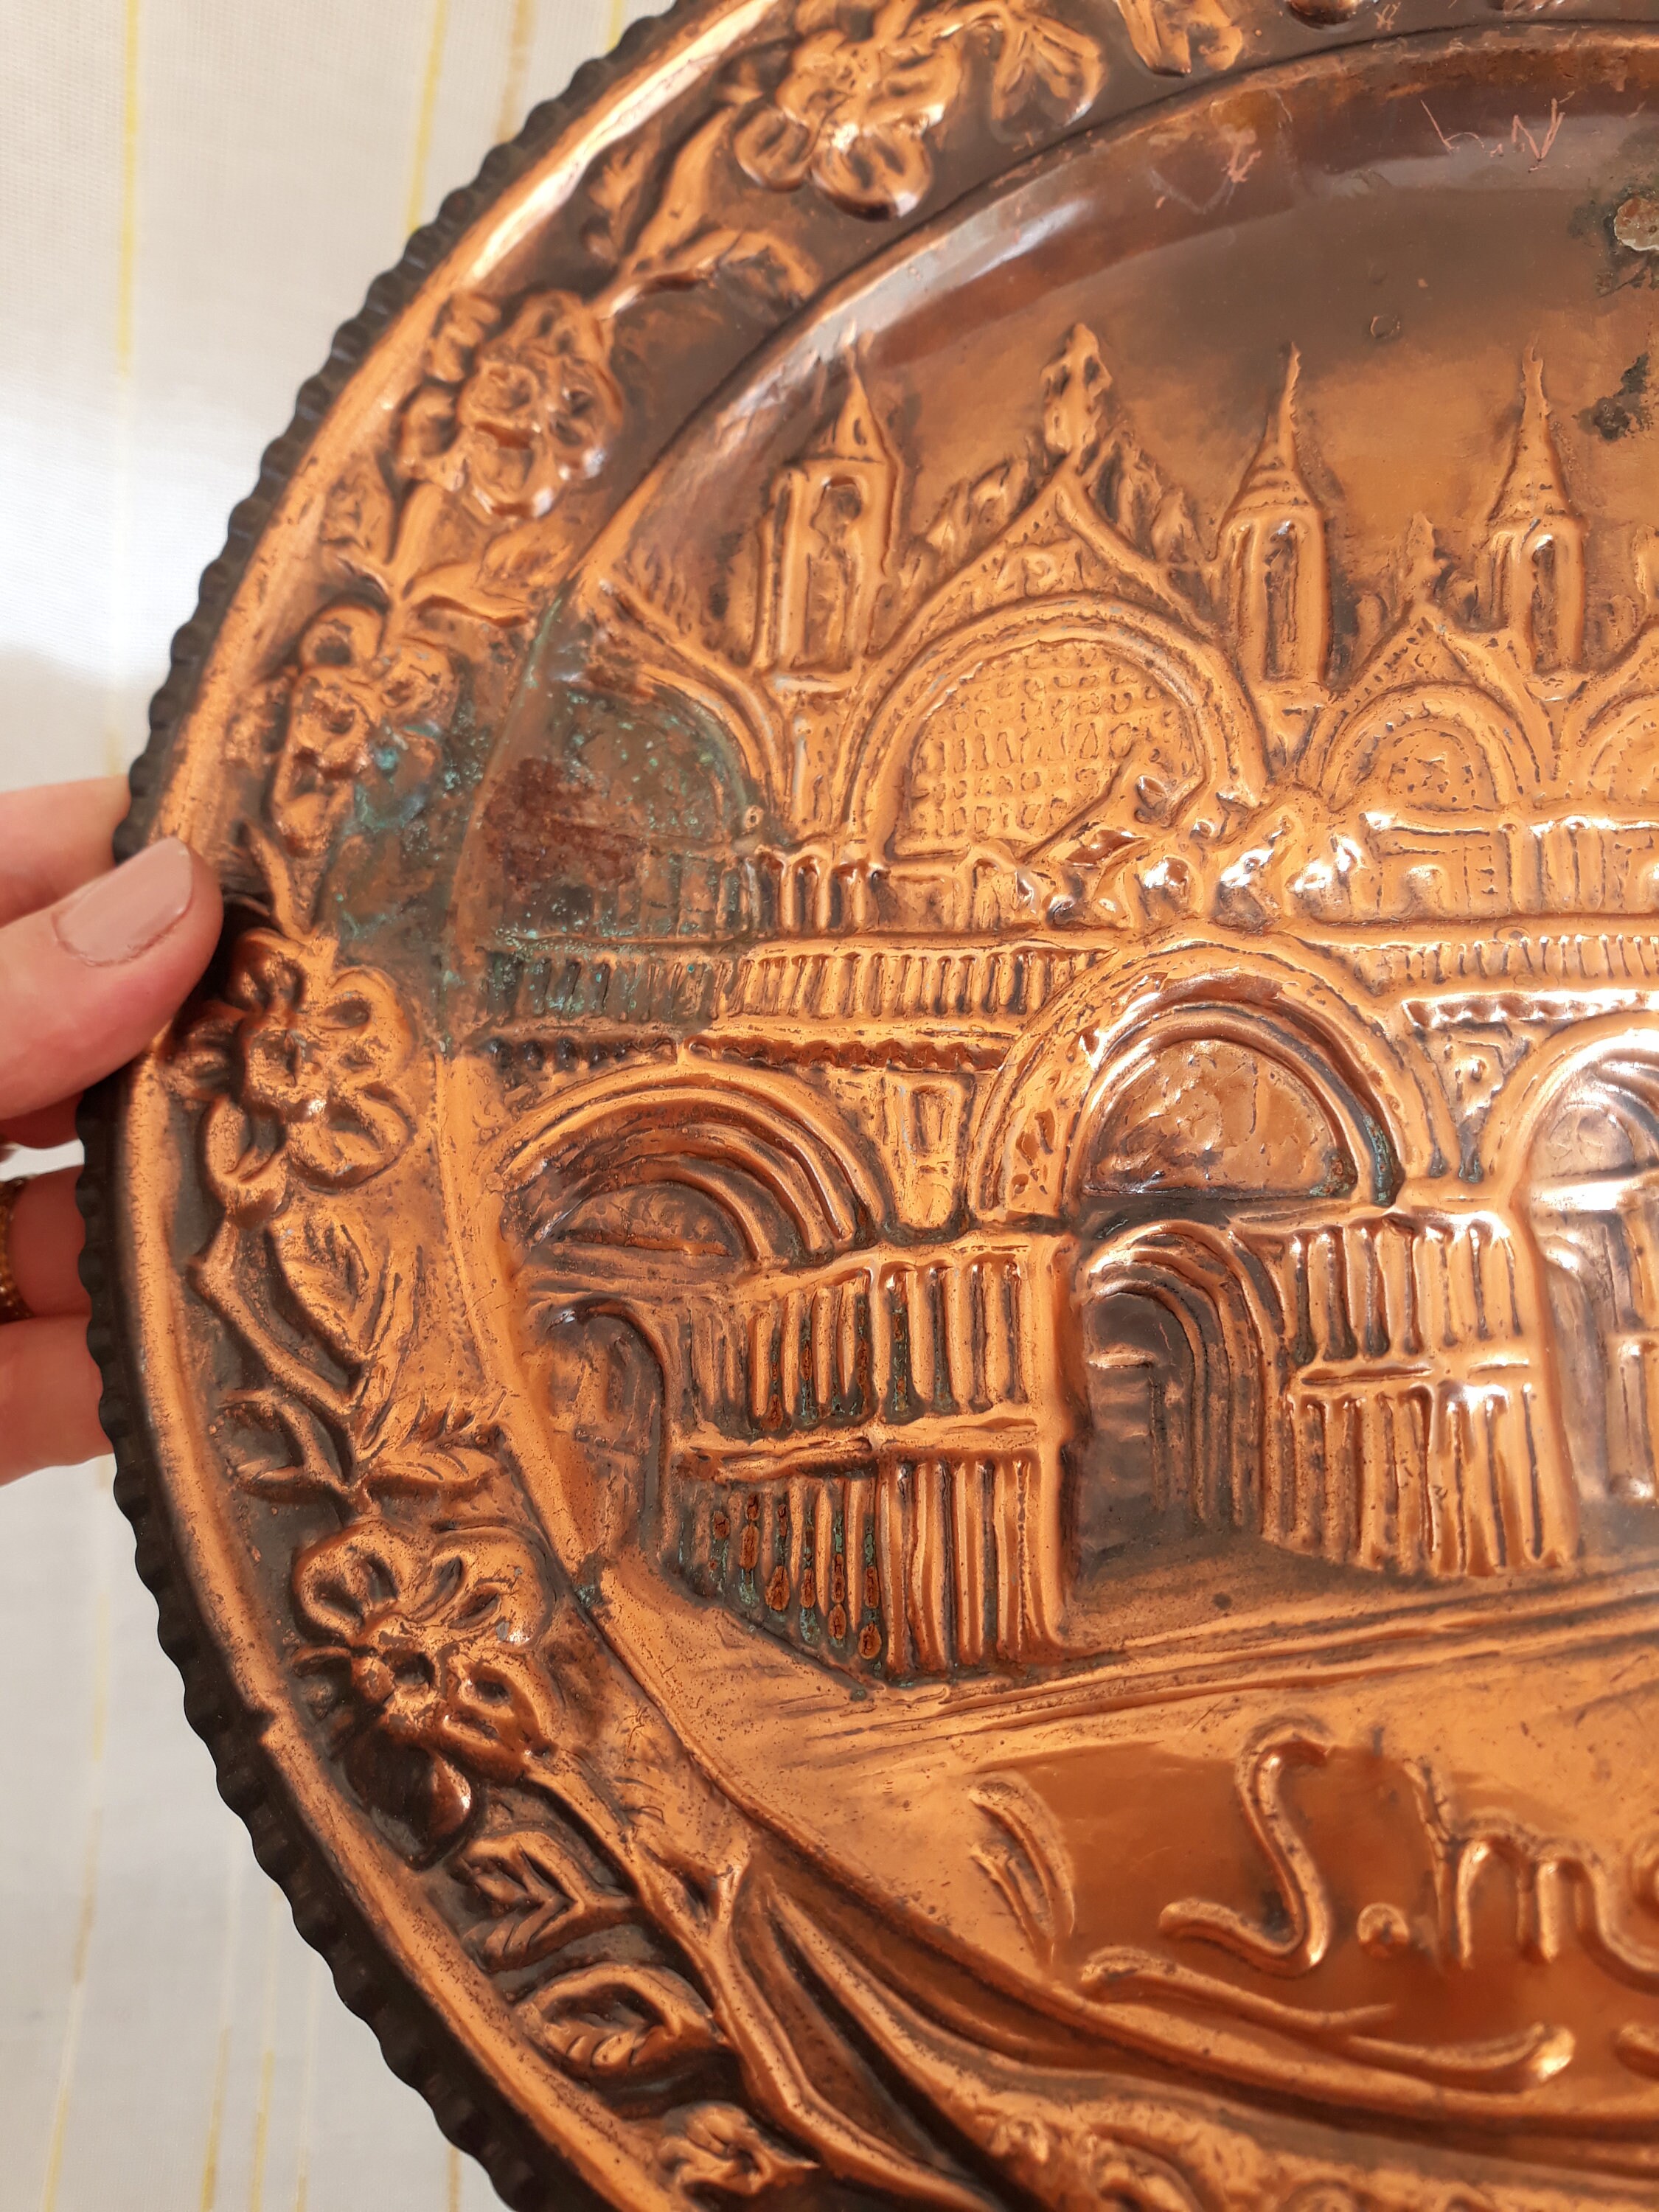 Vintage Italy Copper Plate Souvenir of Italy ponte Di -  Norway